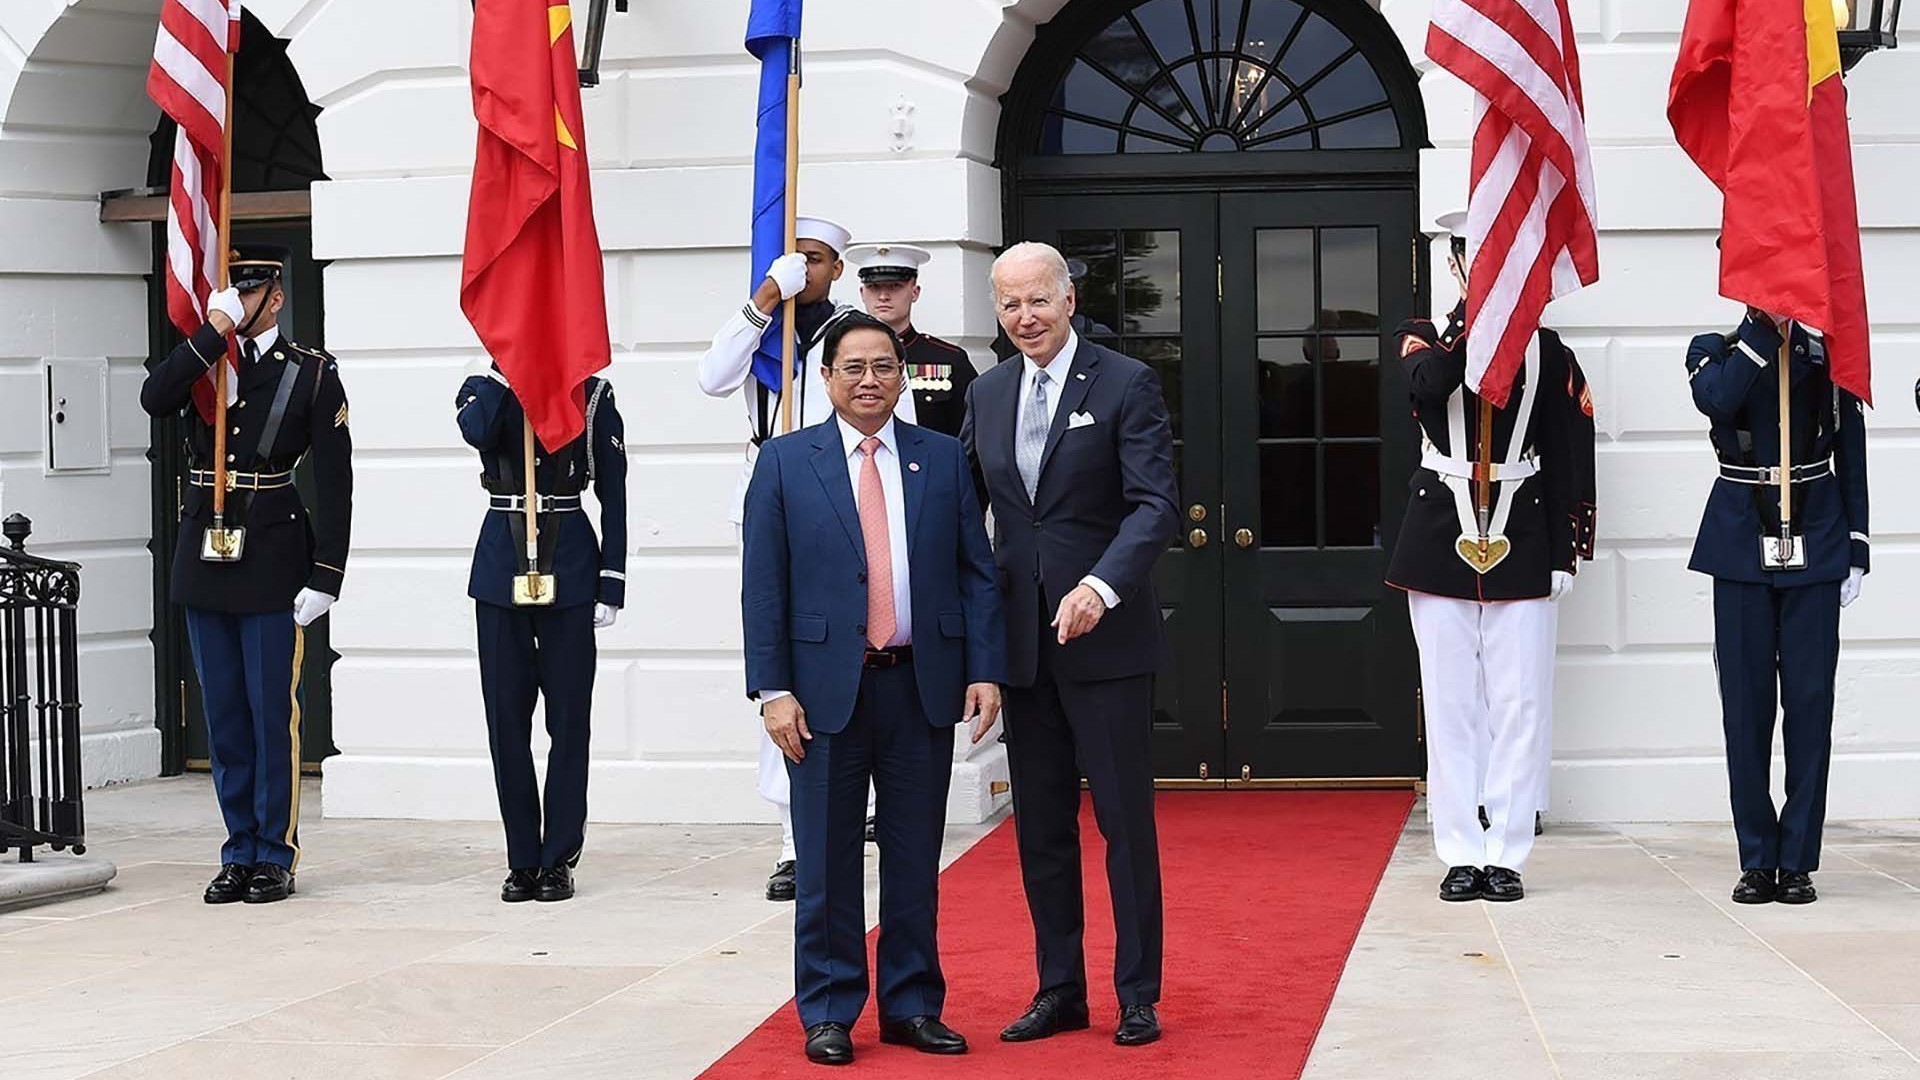 PM Pham Minh Chinh meets with US President Joe Biden